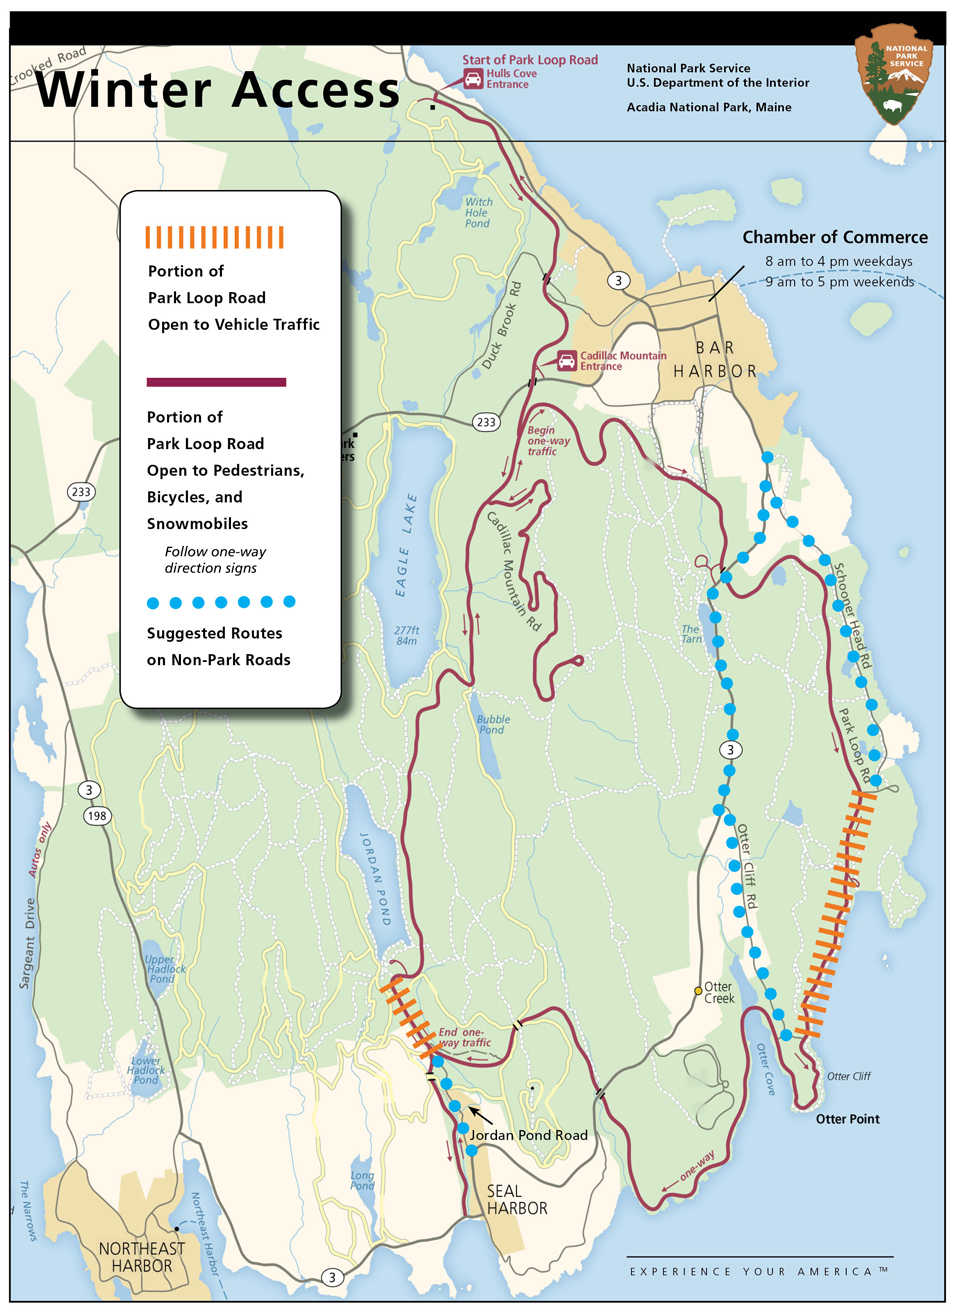 Map of Park Loop Road access in winter